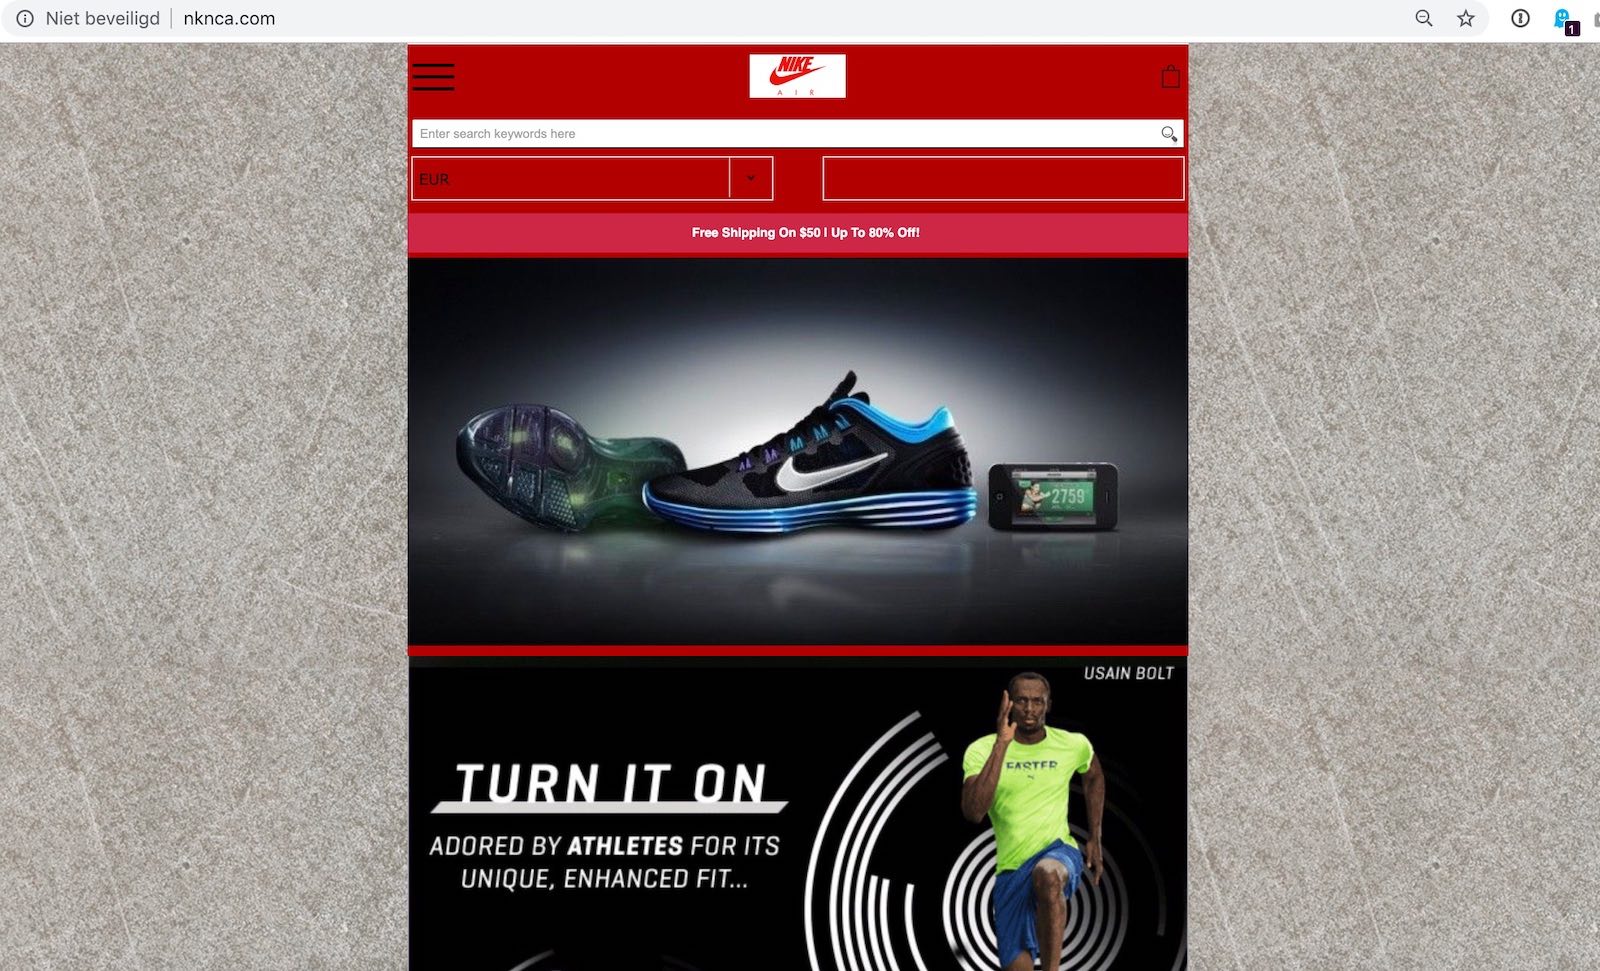 Sta in plaats daarvan op Vermomd account Valse Nike webshop nknca.com